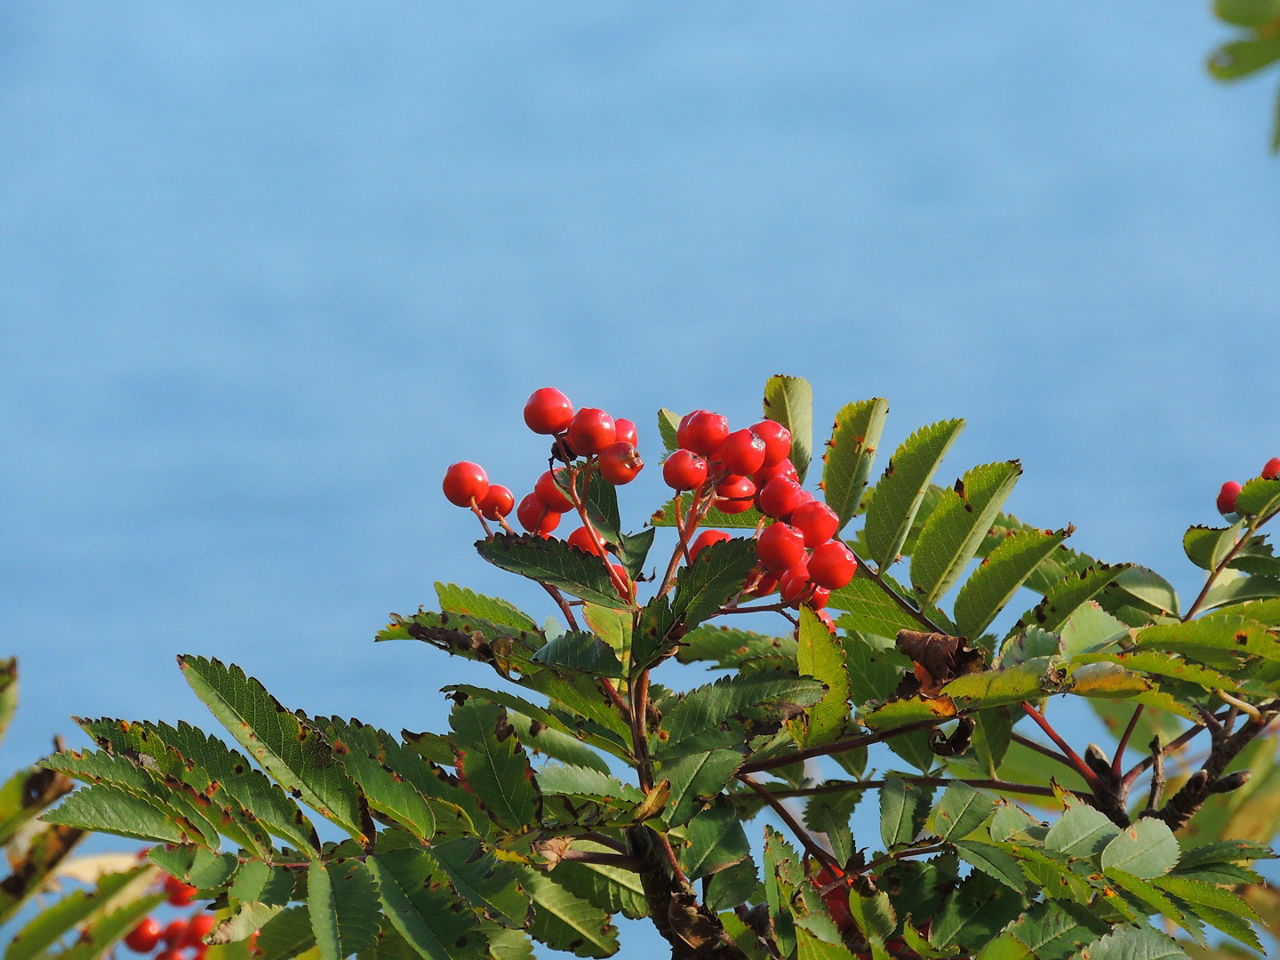 Skjolden, Norway, Rowan berries on a tree